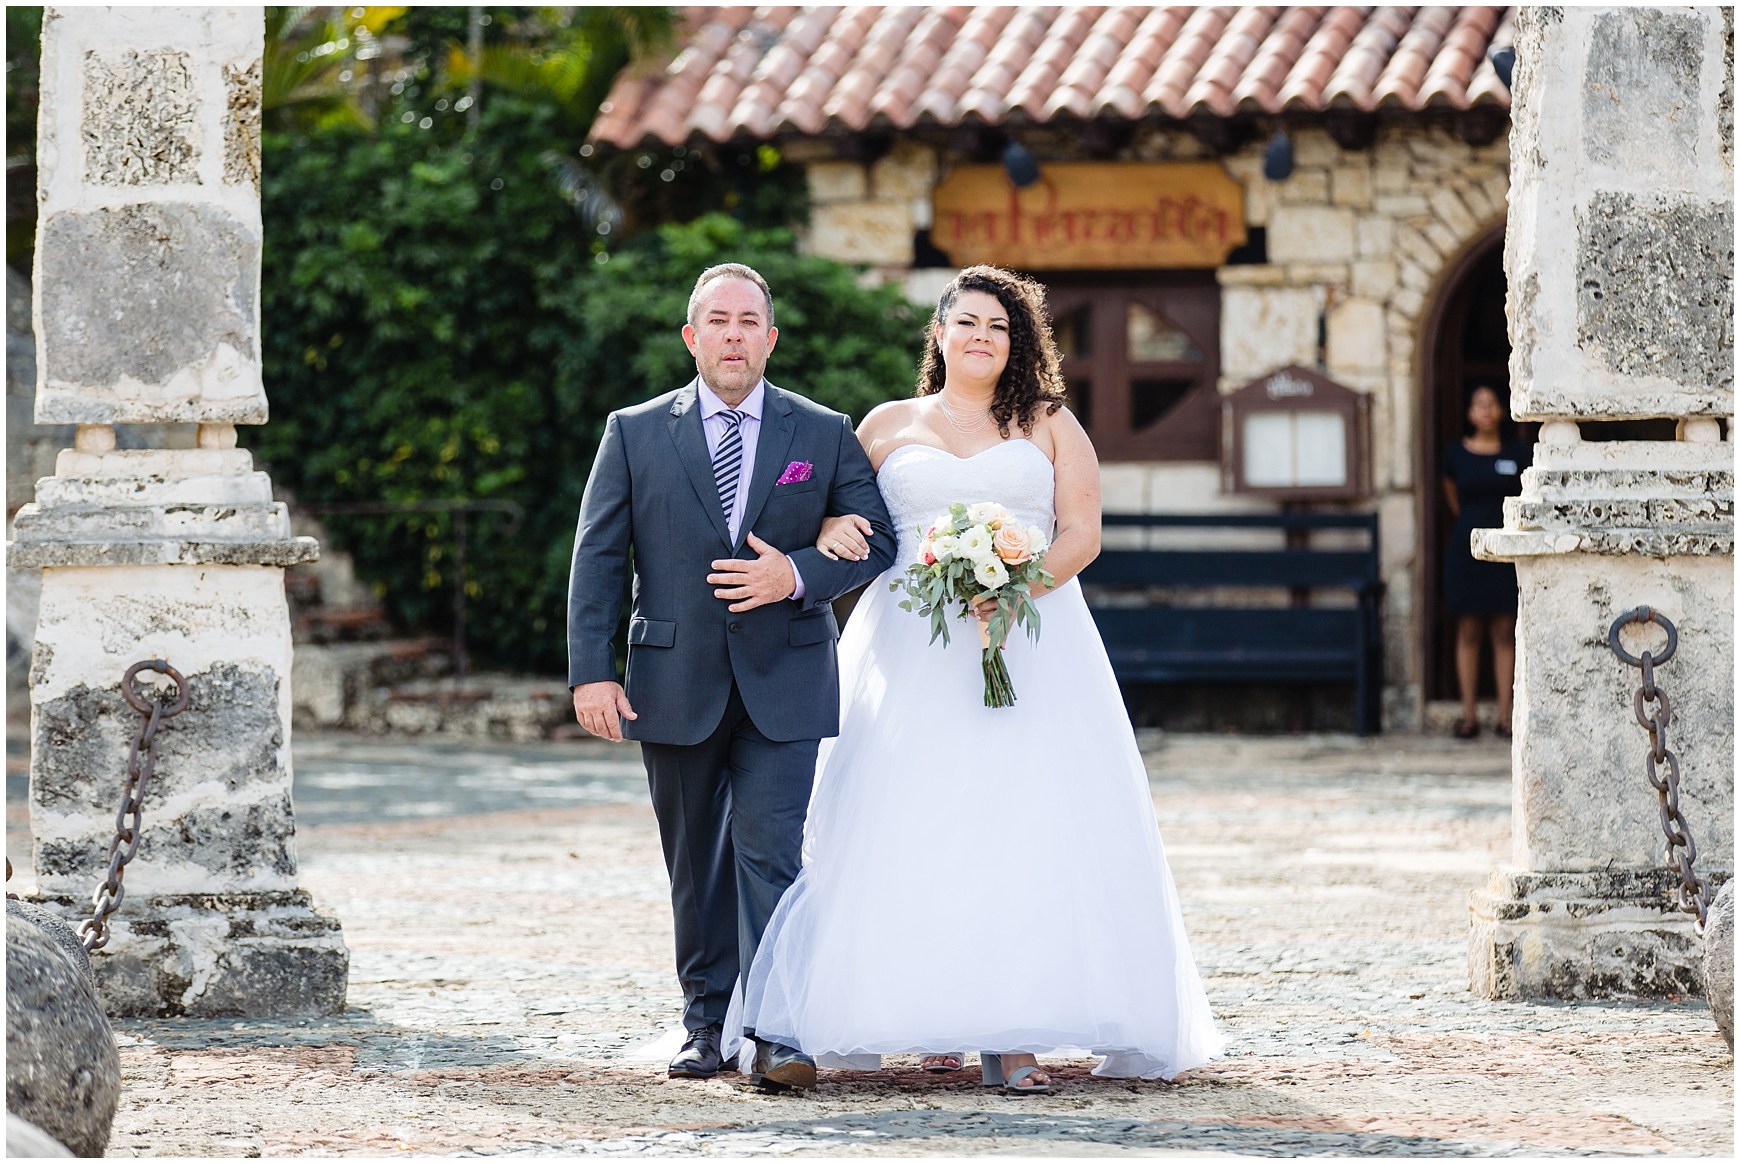 Destination Wedding at Altos de Chavon in the Dominican Republic - Estefania and Ryan_0026.jpg